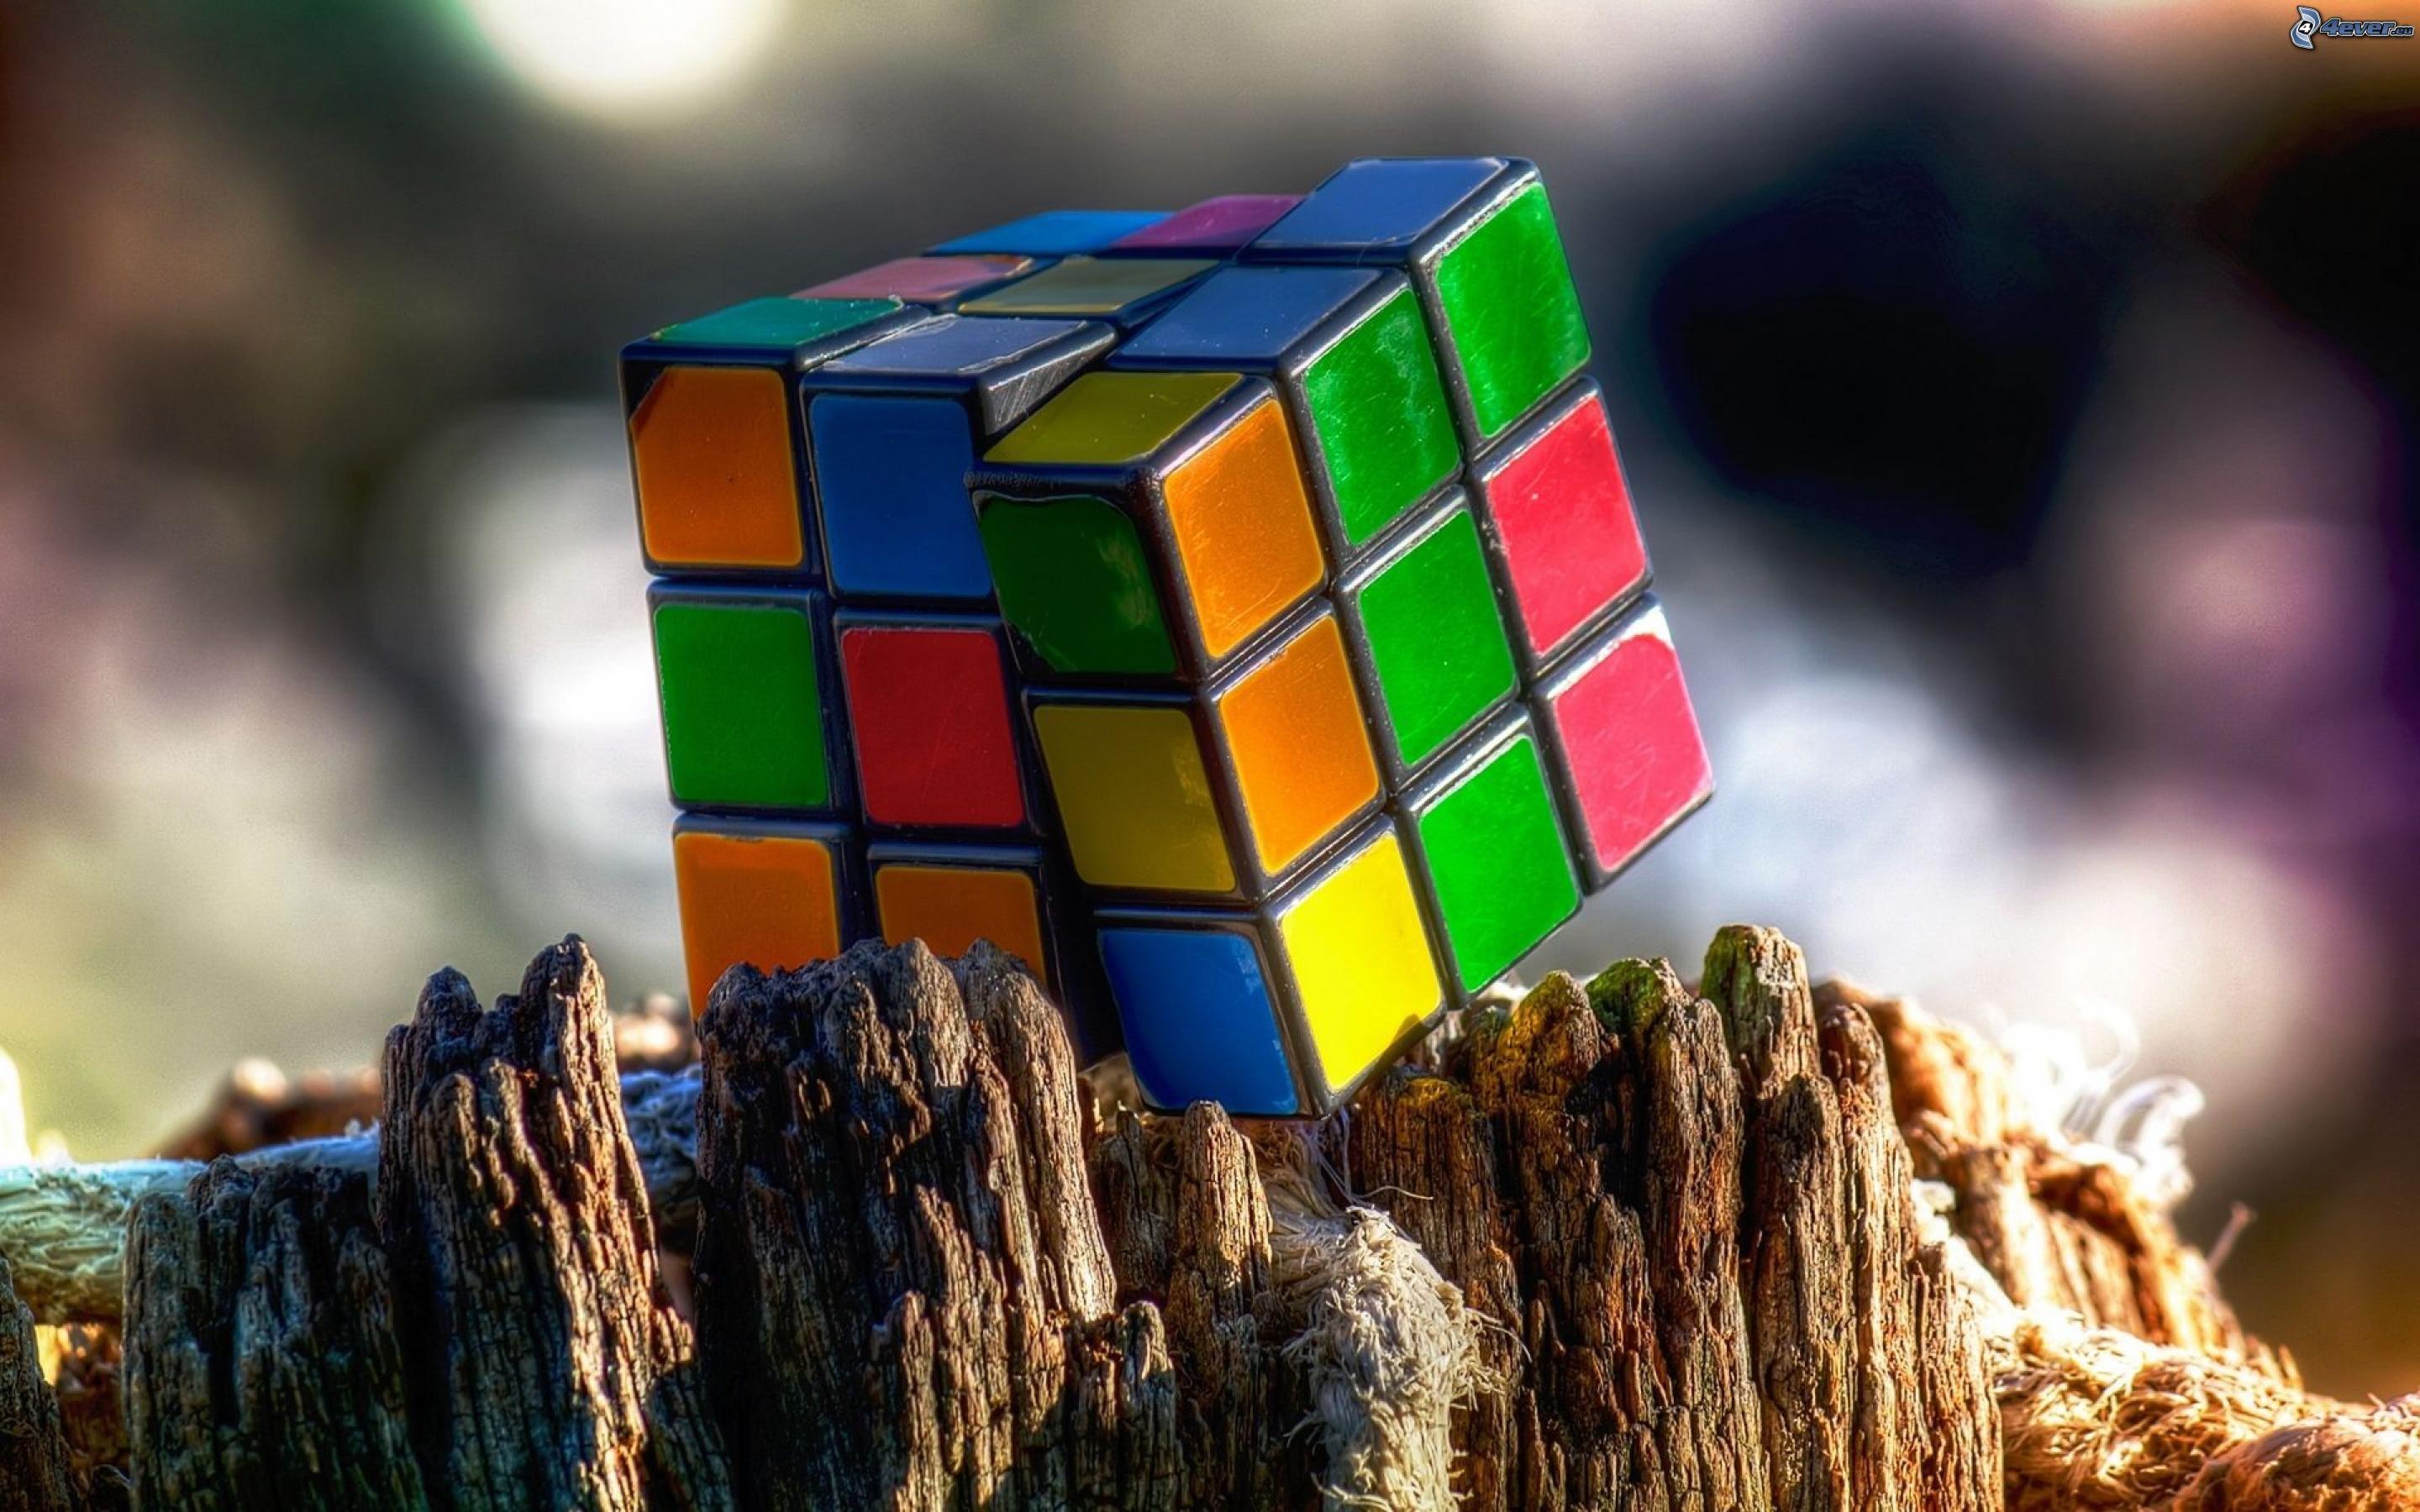 The mysterious Rubik Cube